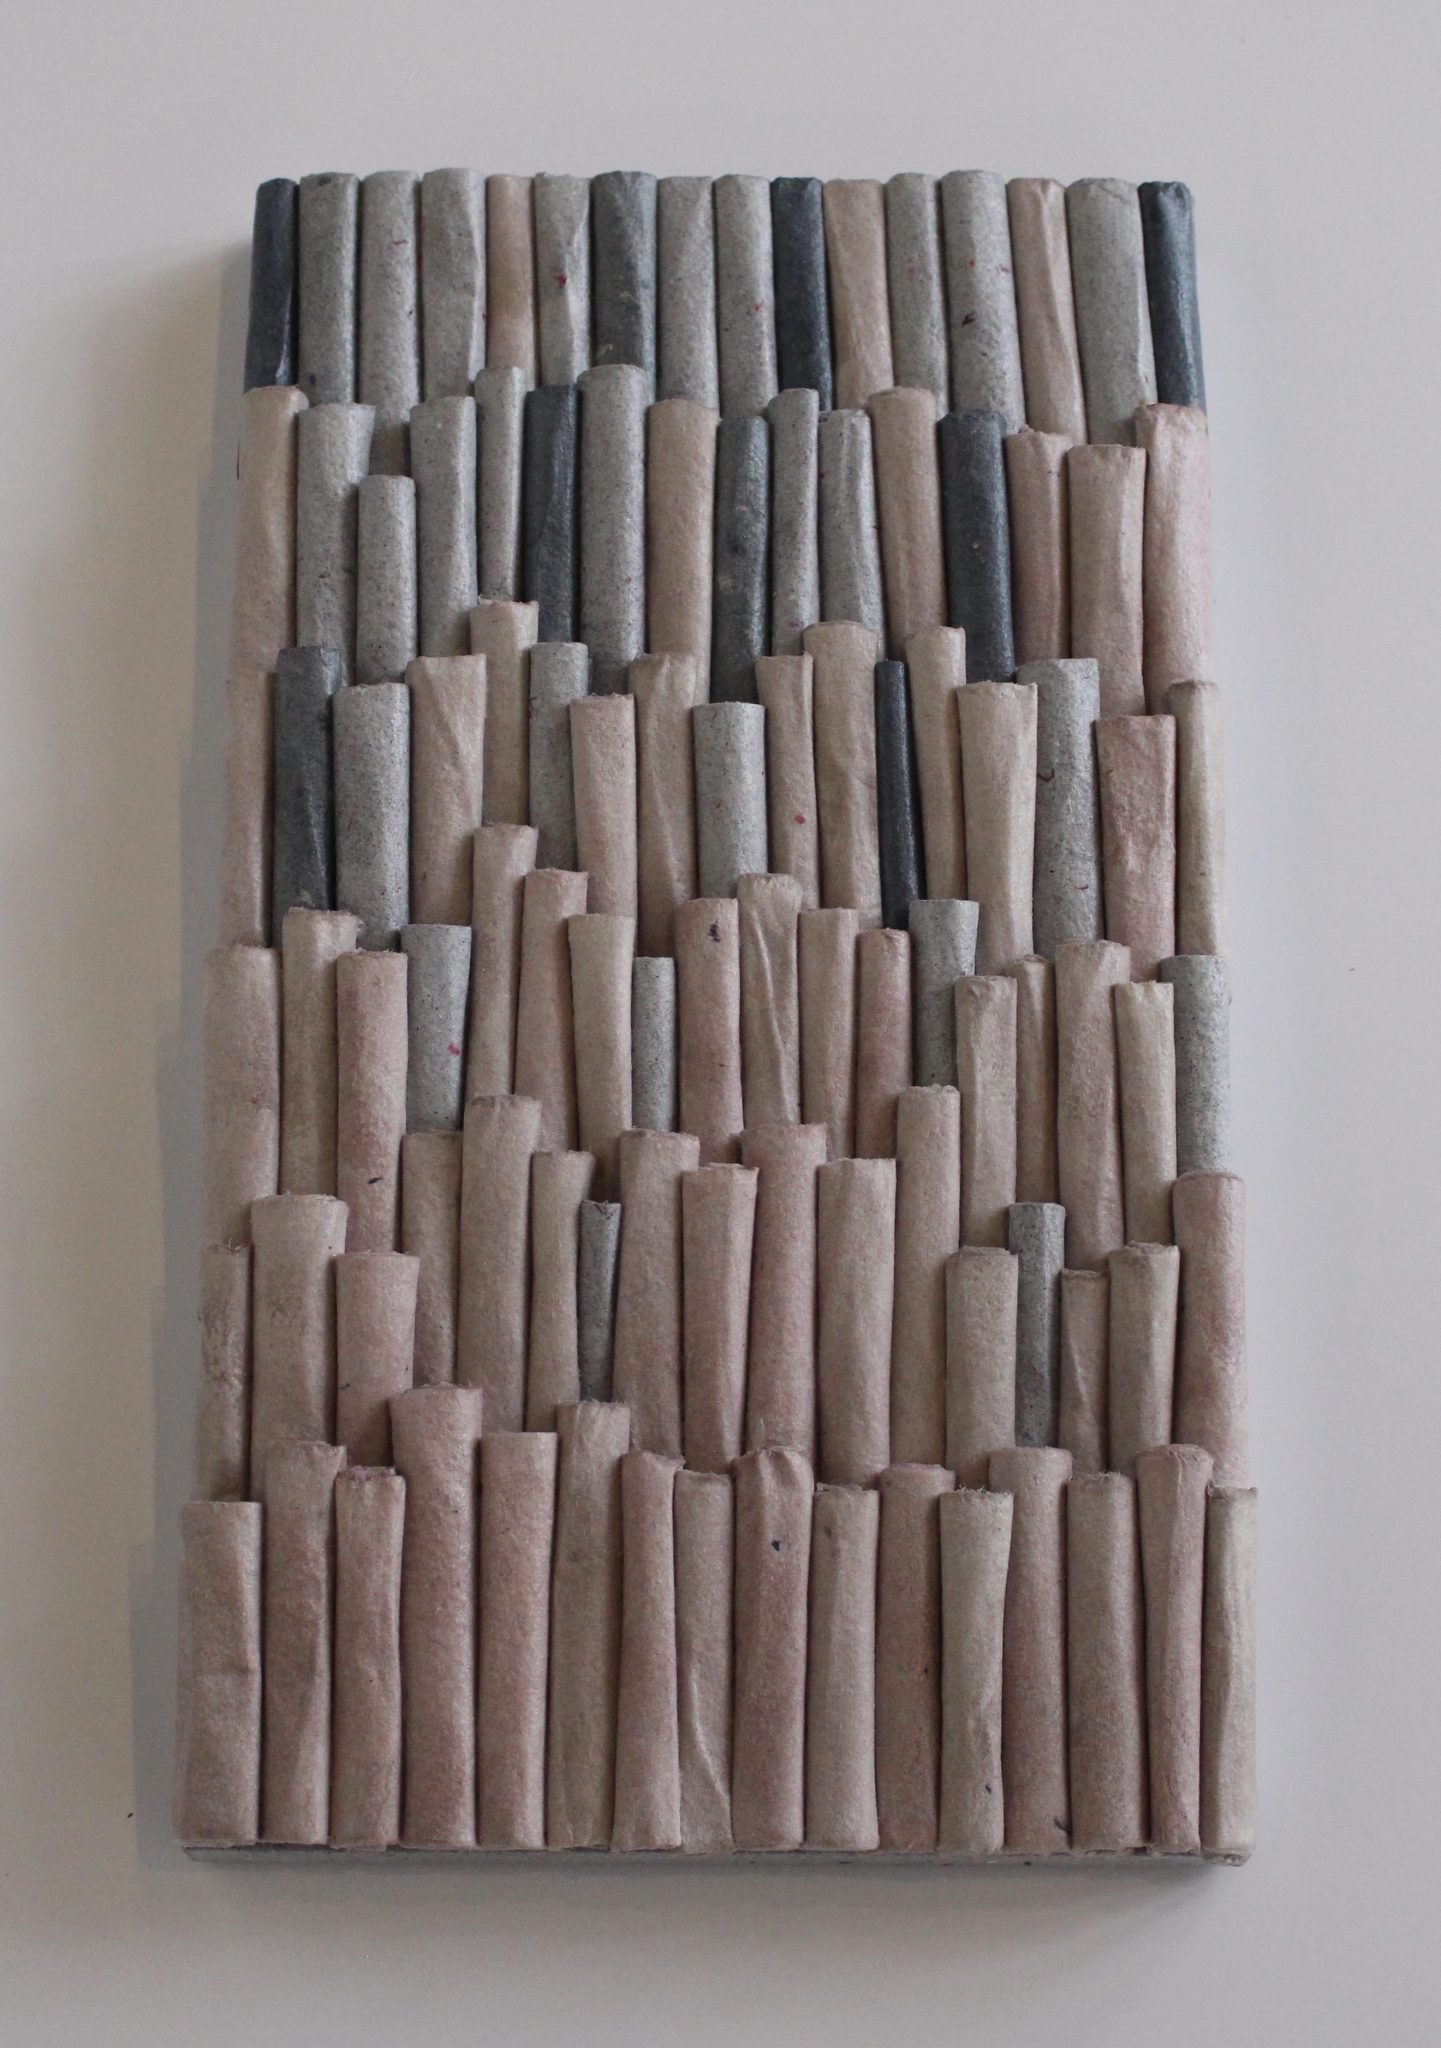 Jenn Hassin, "People of Service, LGBTQ"; Rolled handmade paper, matte medium, mounted on wood; 10” x 18”